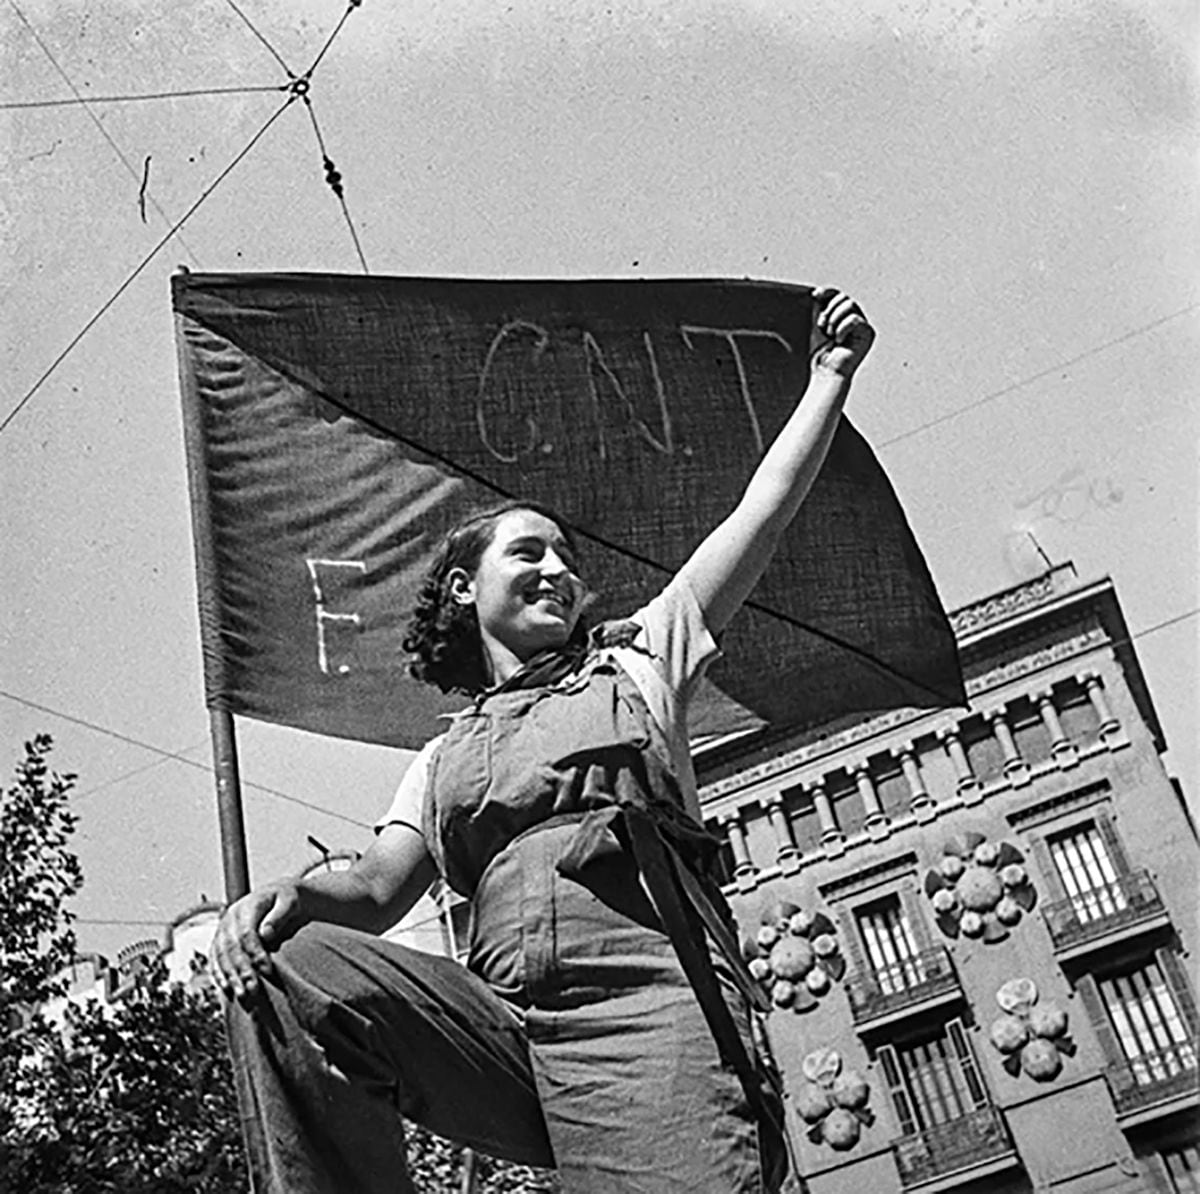 Ana Garbín Alonso: Identity of 'anarchist Madonna' revealed 87 years after  iconic Spanish Civil War photo, International